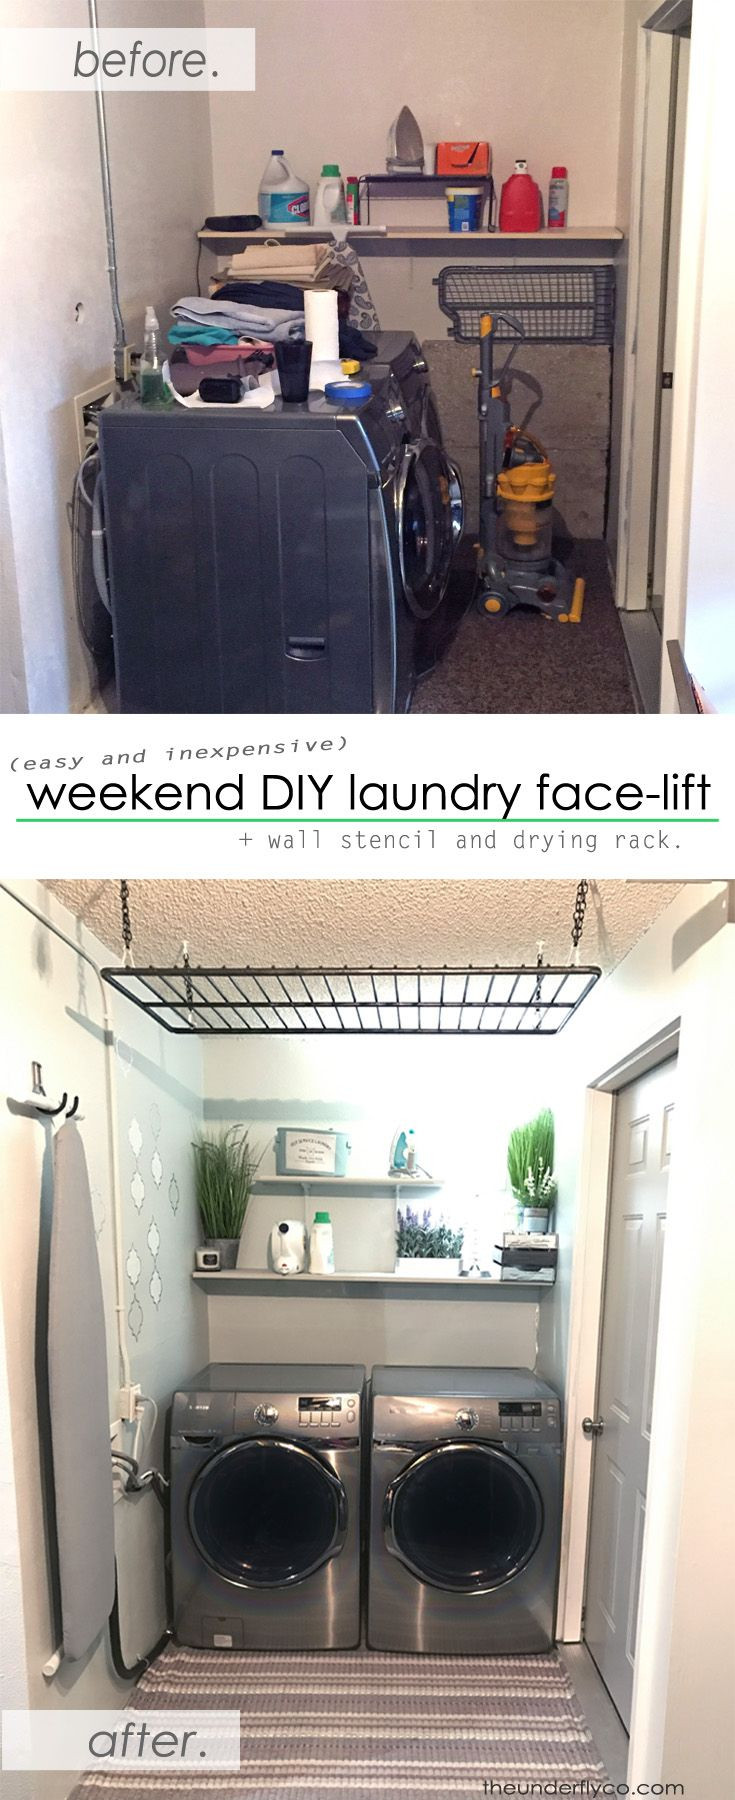 Best ideas about Garage Laundry Room Ideas
. Save or Pin 1000 ideas about Garage Laundry on Pinterest Now.